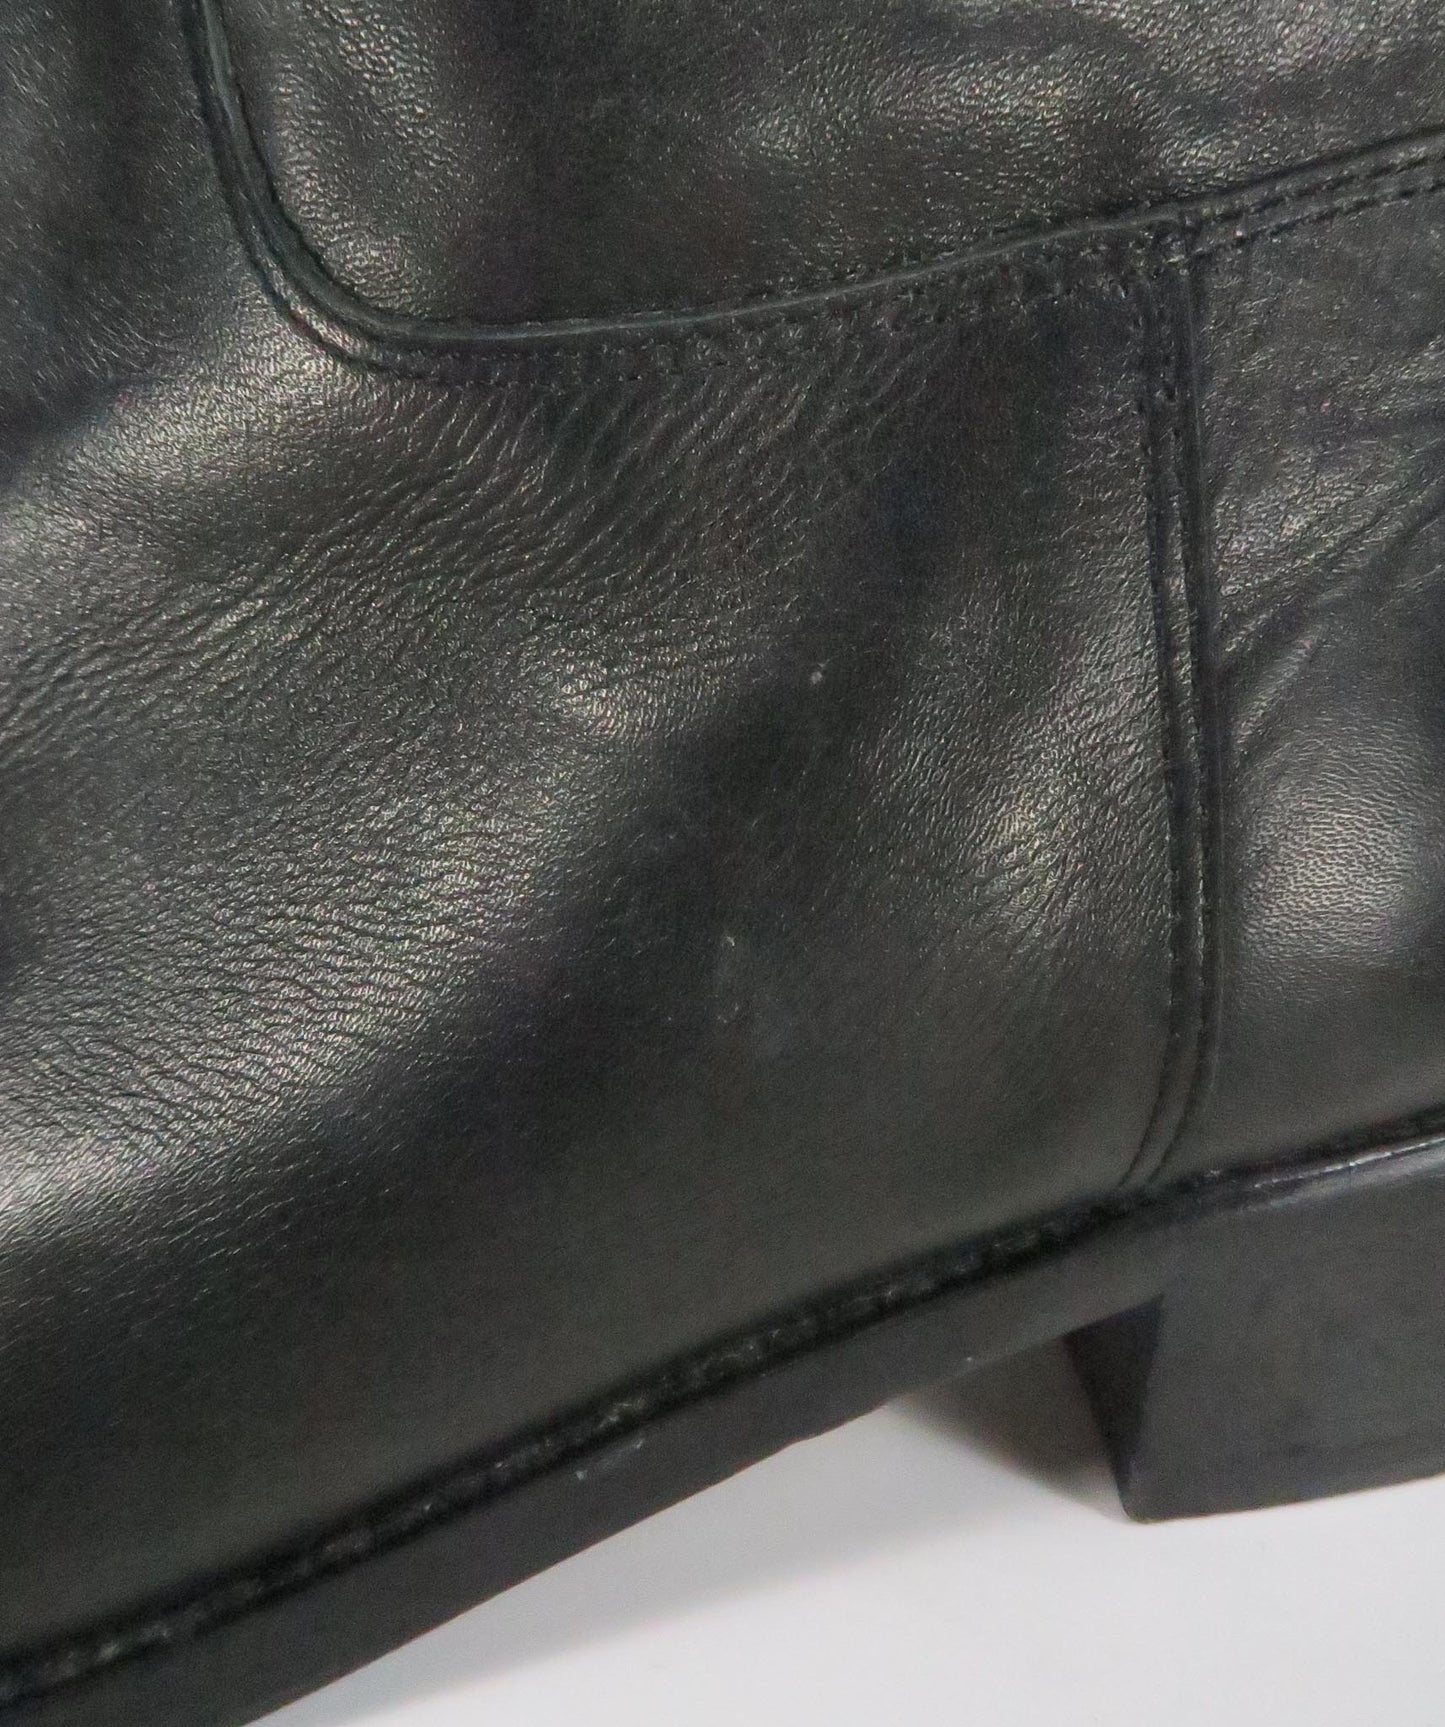 Hermès Black Leather Knee Length Riding Boots UK 5 EU 38 👠